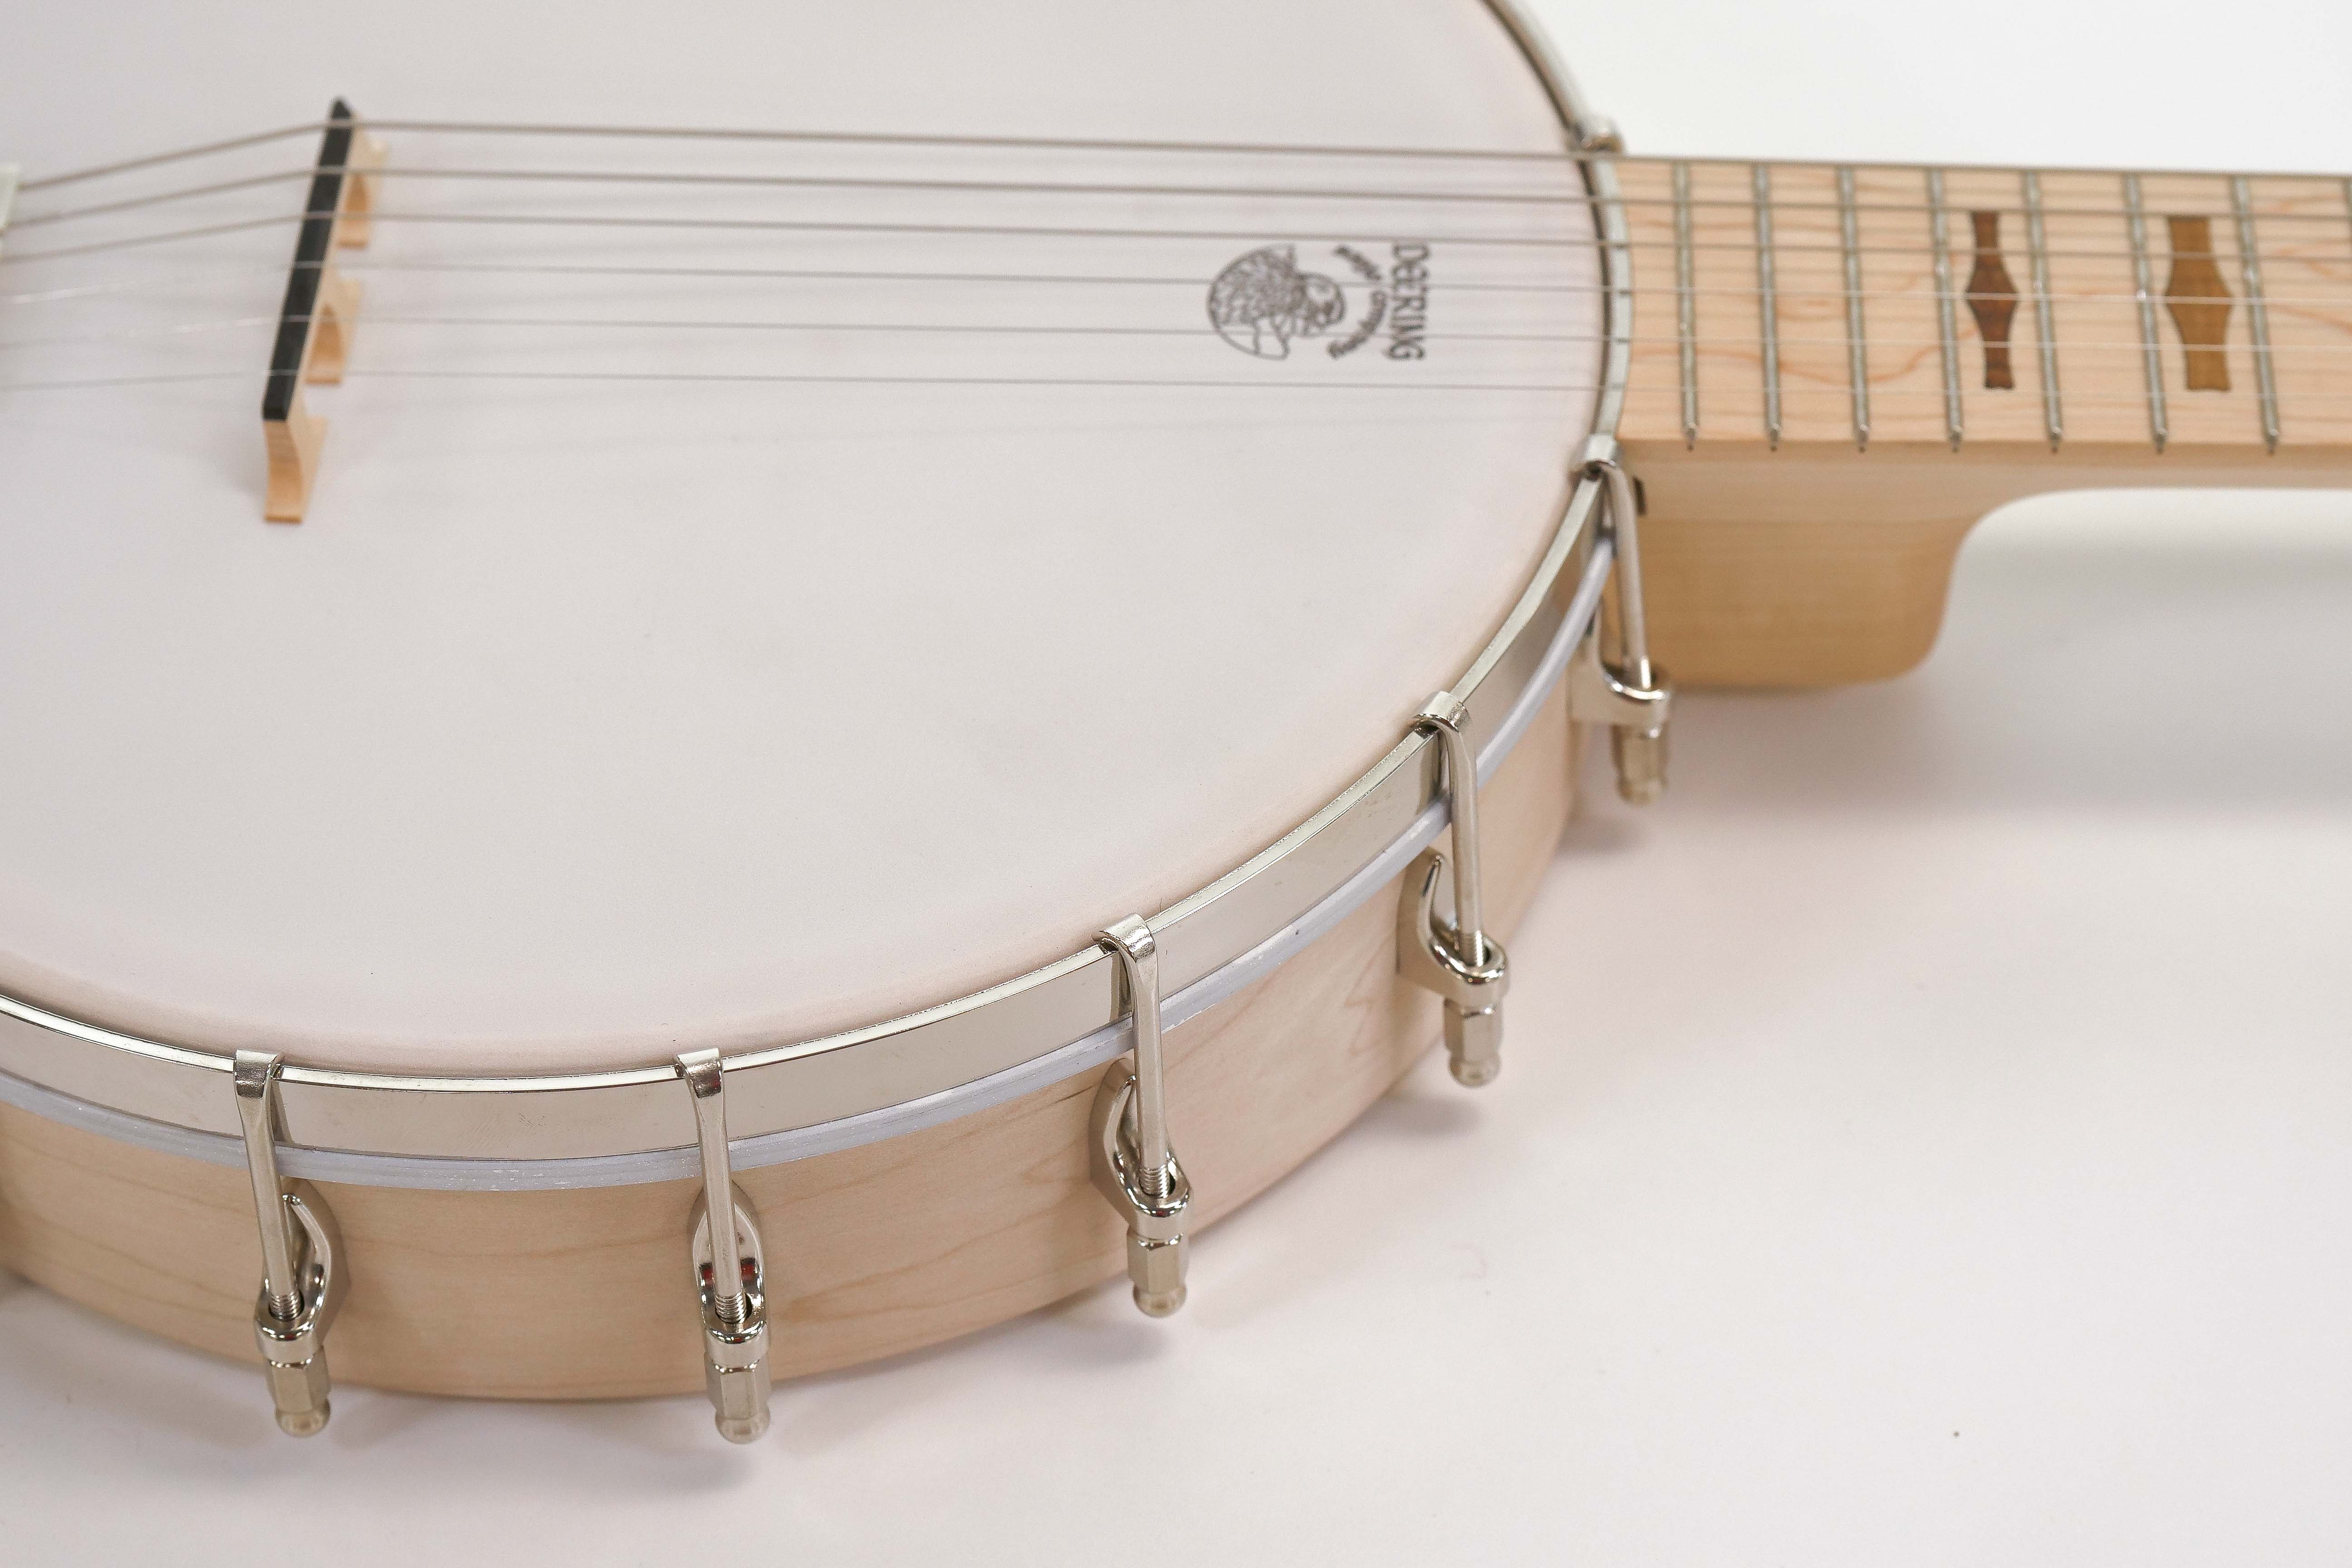 Deering Goodtime Six 6 String Banjo - E-A-D-G-B-E Tuning